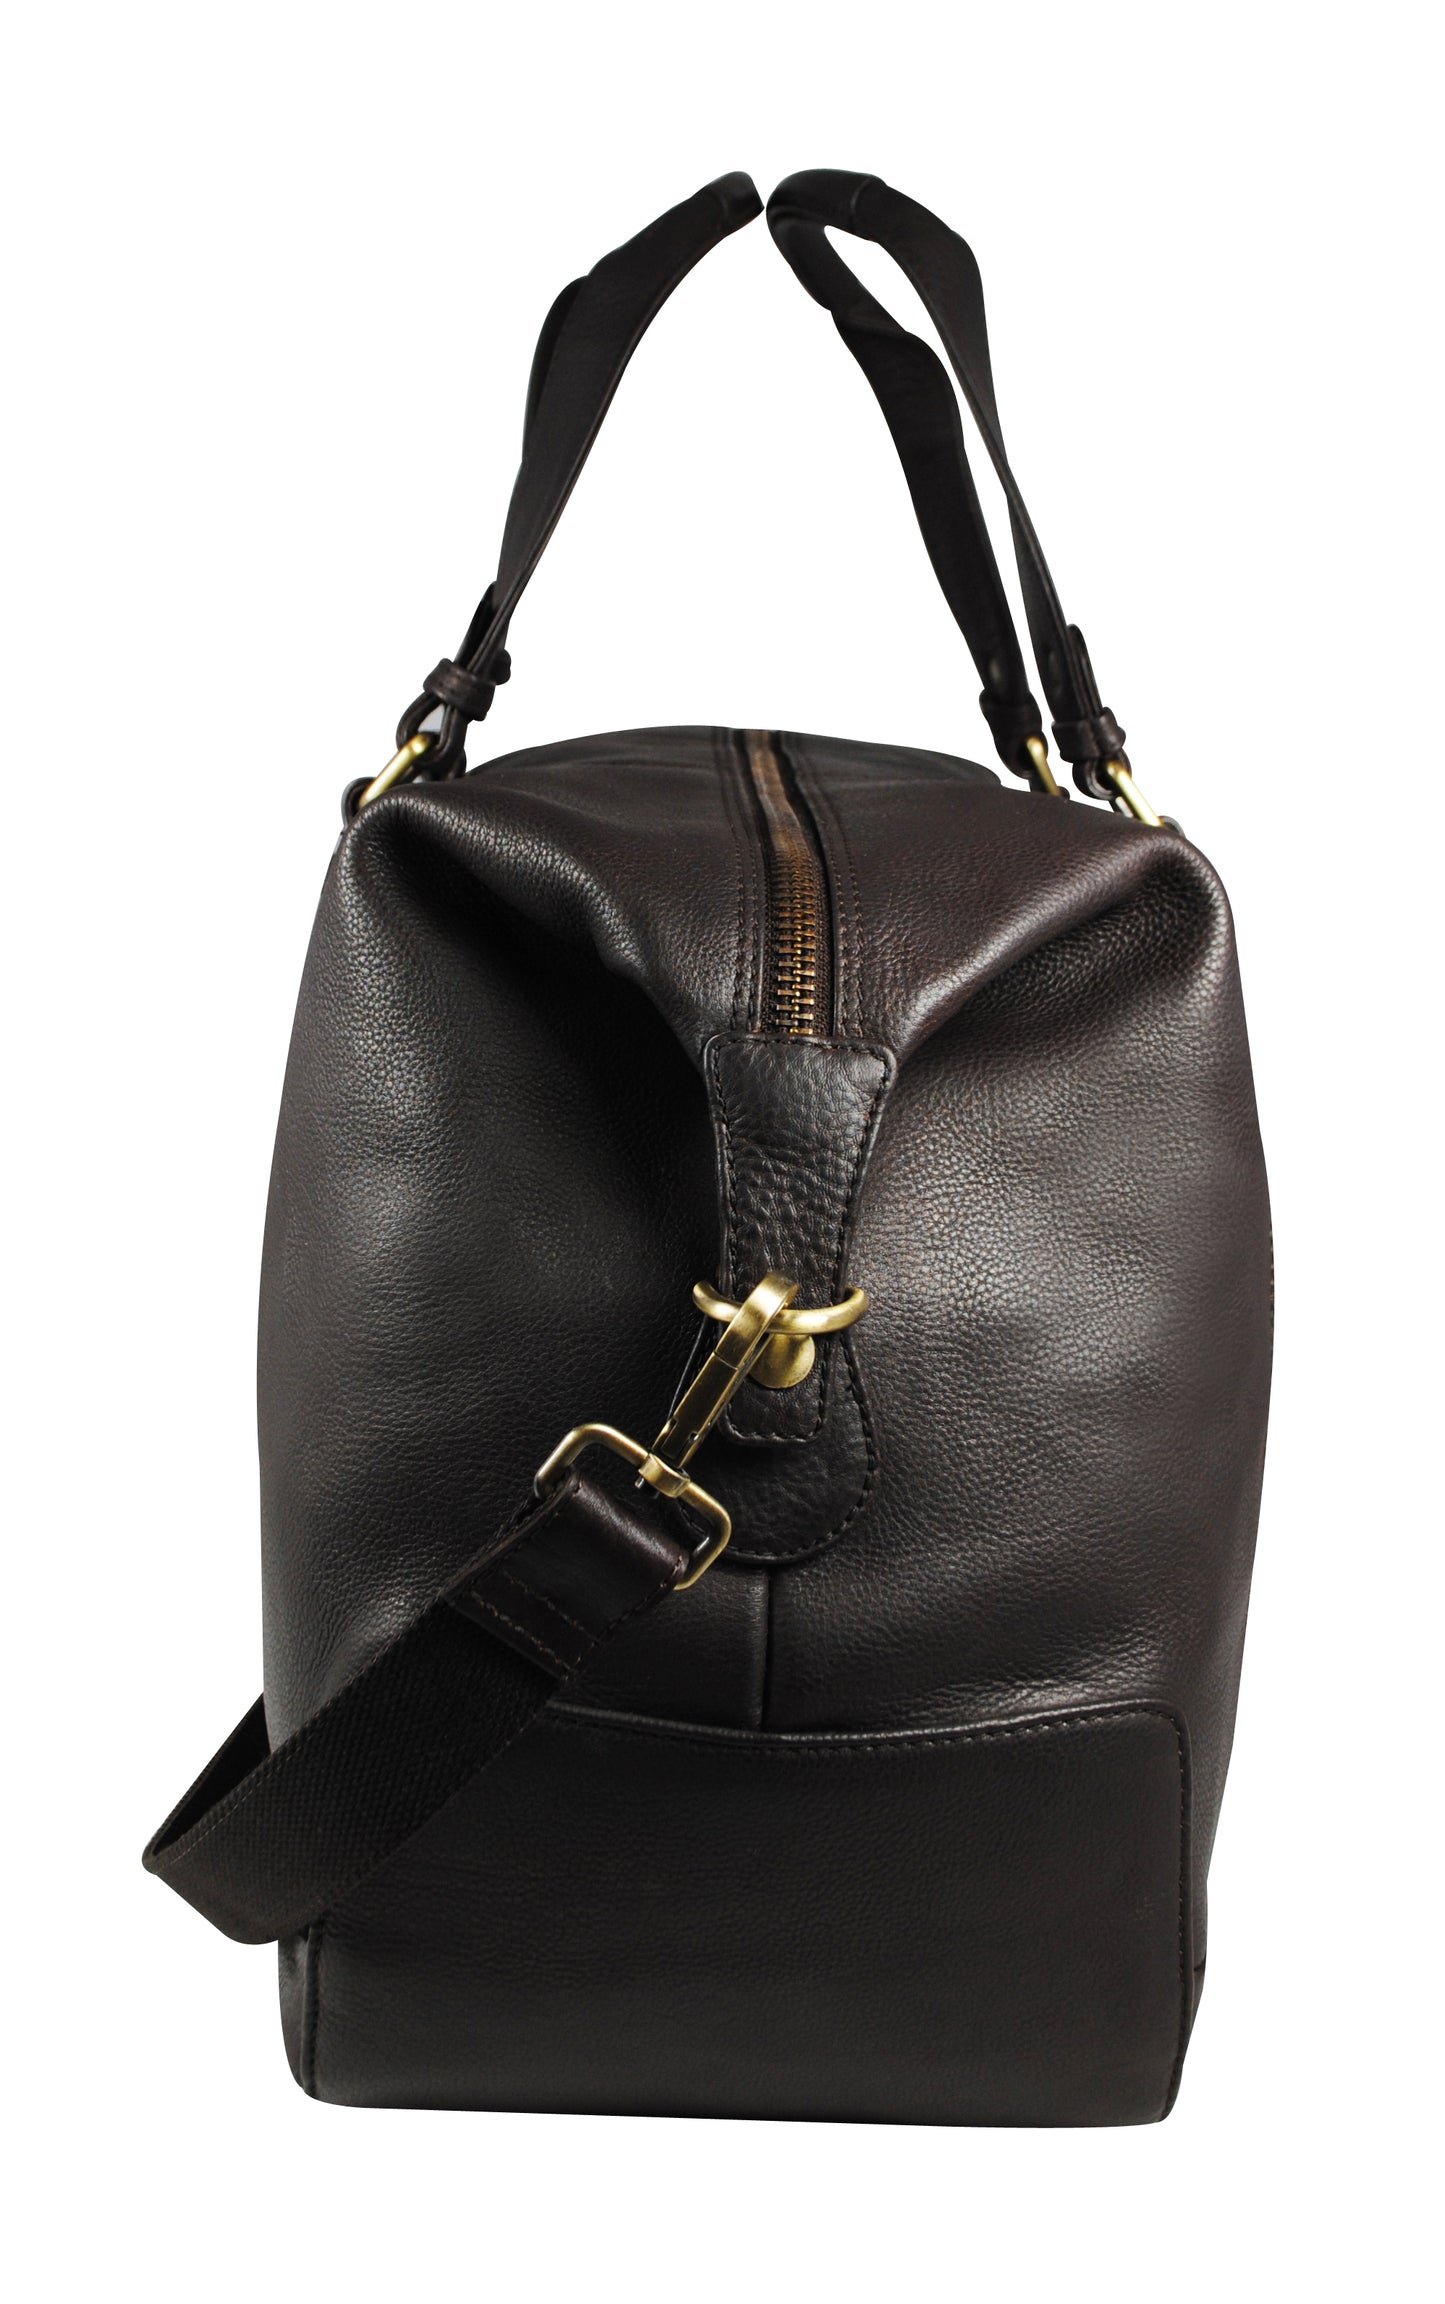 Calfnero Genuine Leather Travel Duffel Bag (LB-04-Brown)